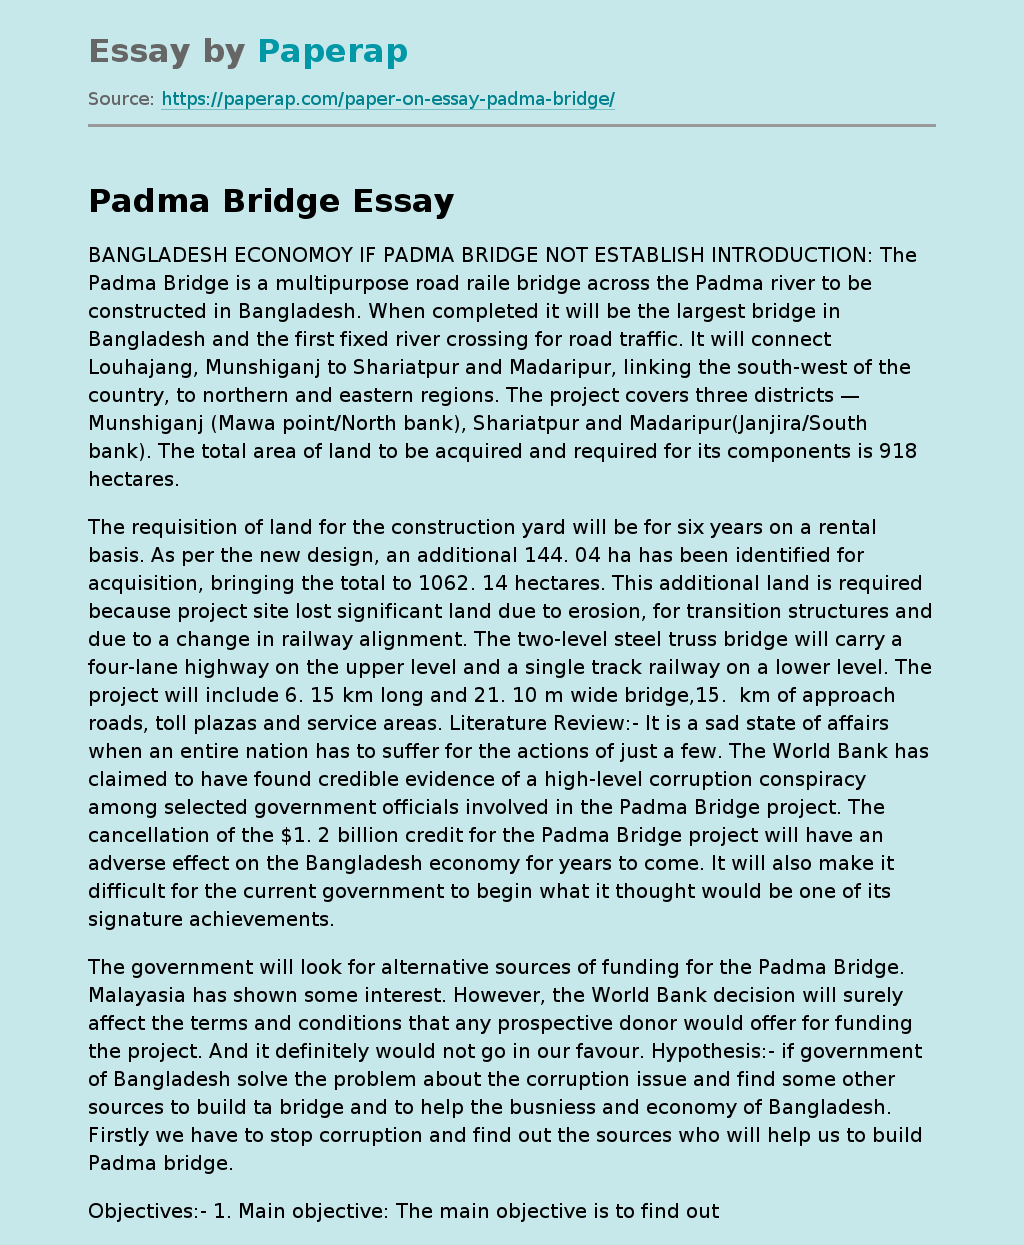 Padma Bridge's Impact on Bangladesh Economy